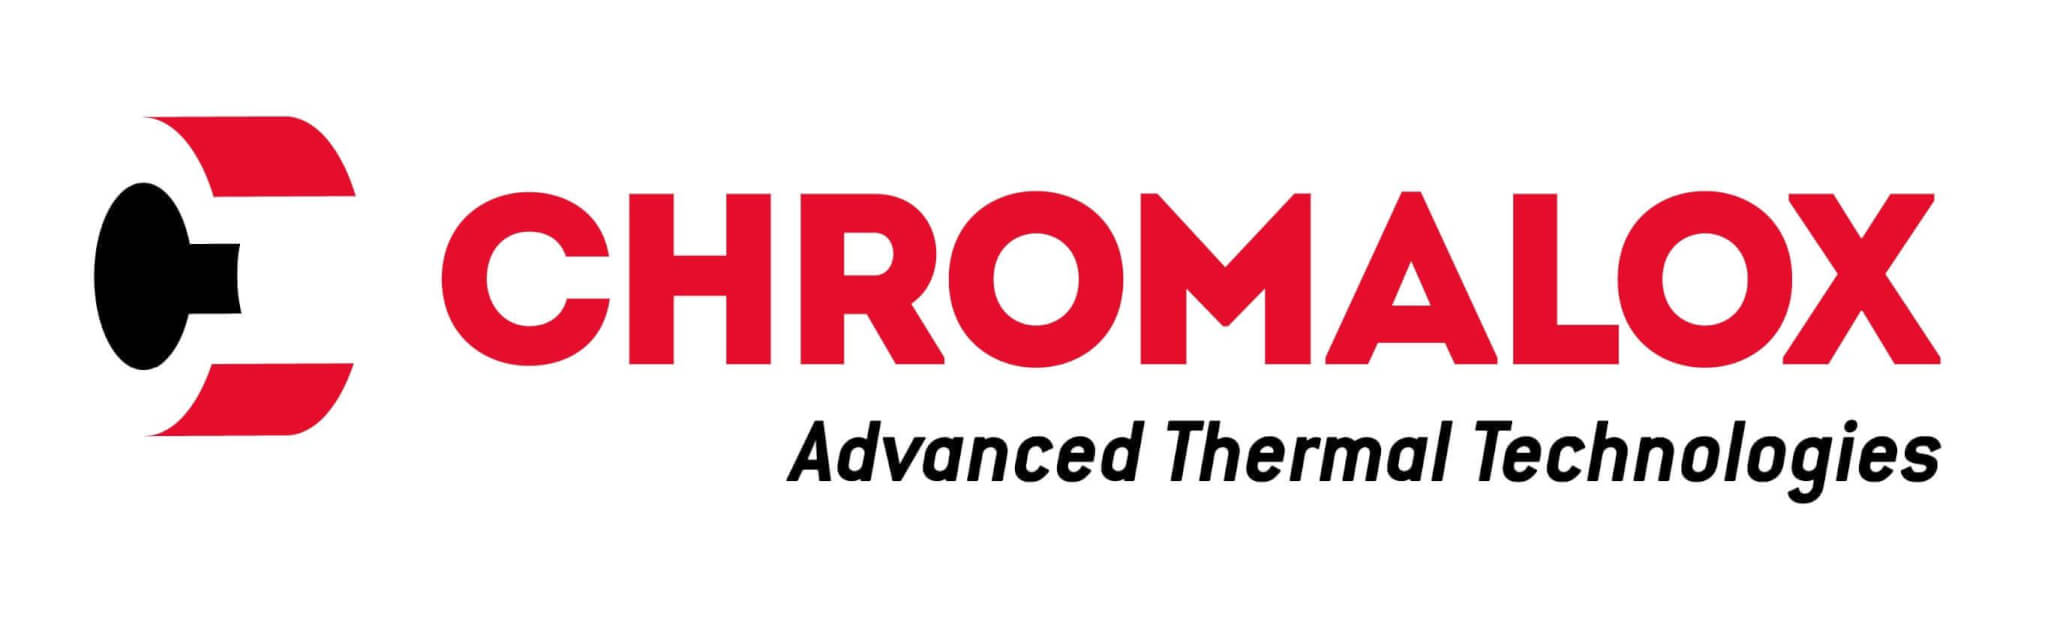 Chromalox-Logo-November2015